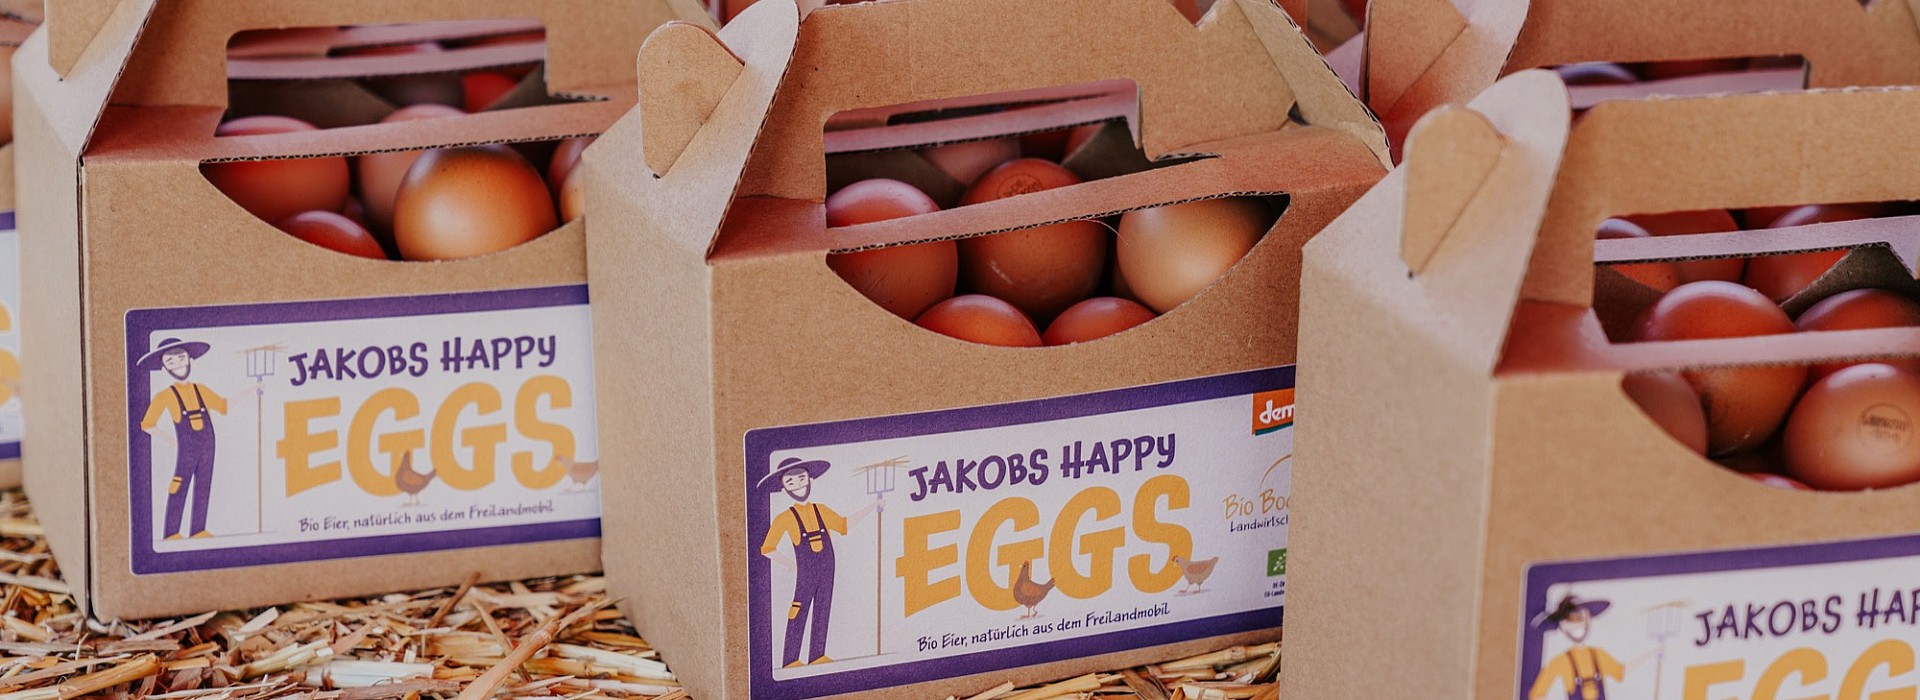 002--happy-eggs.jpg